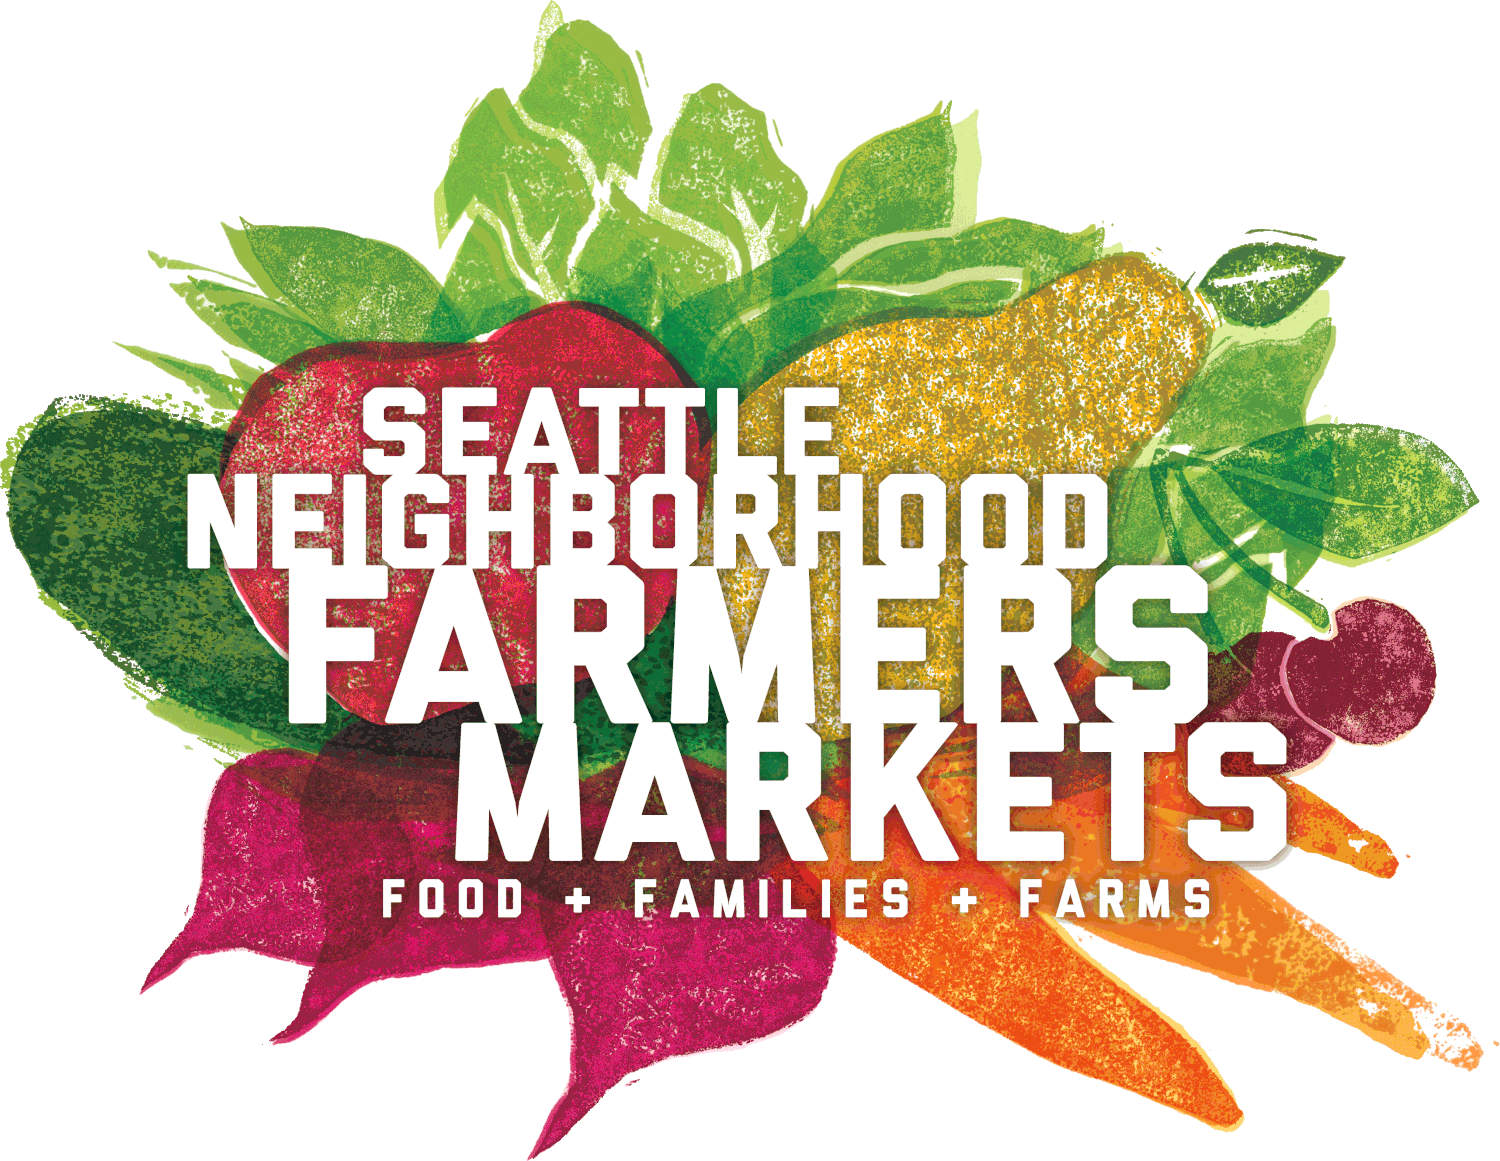 Neighborhood Farmers Markets